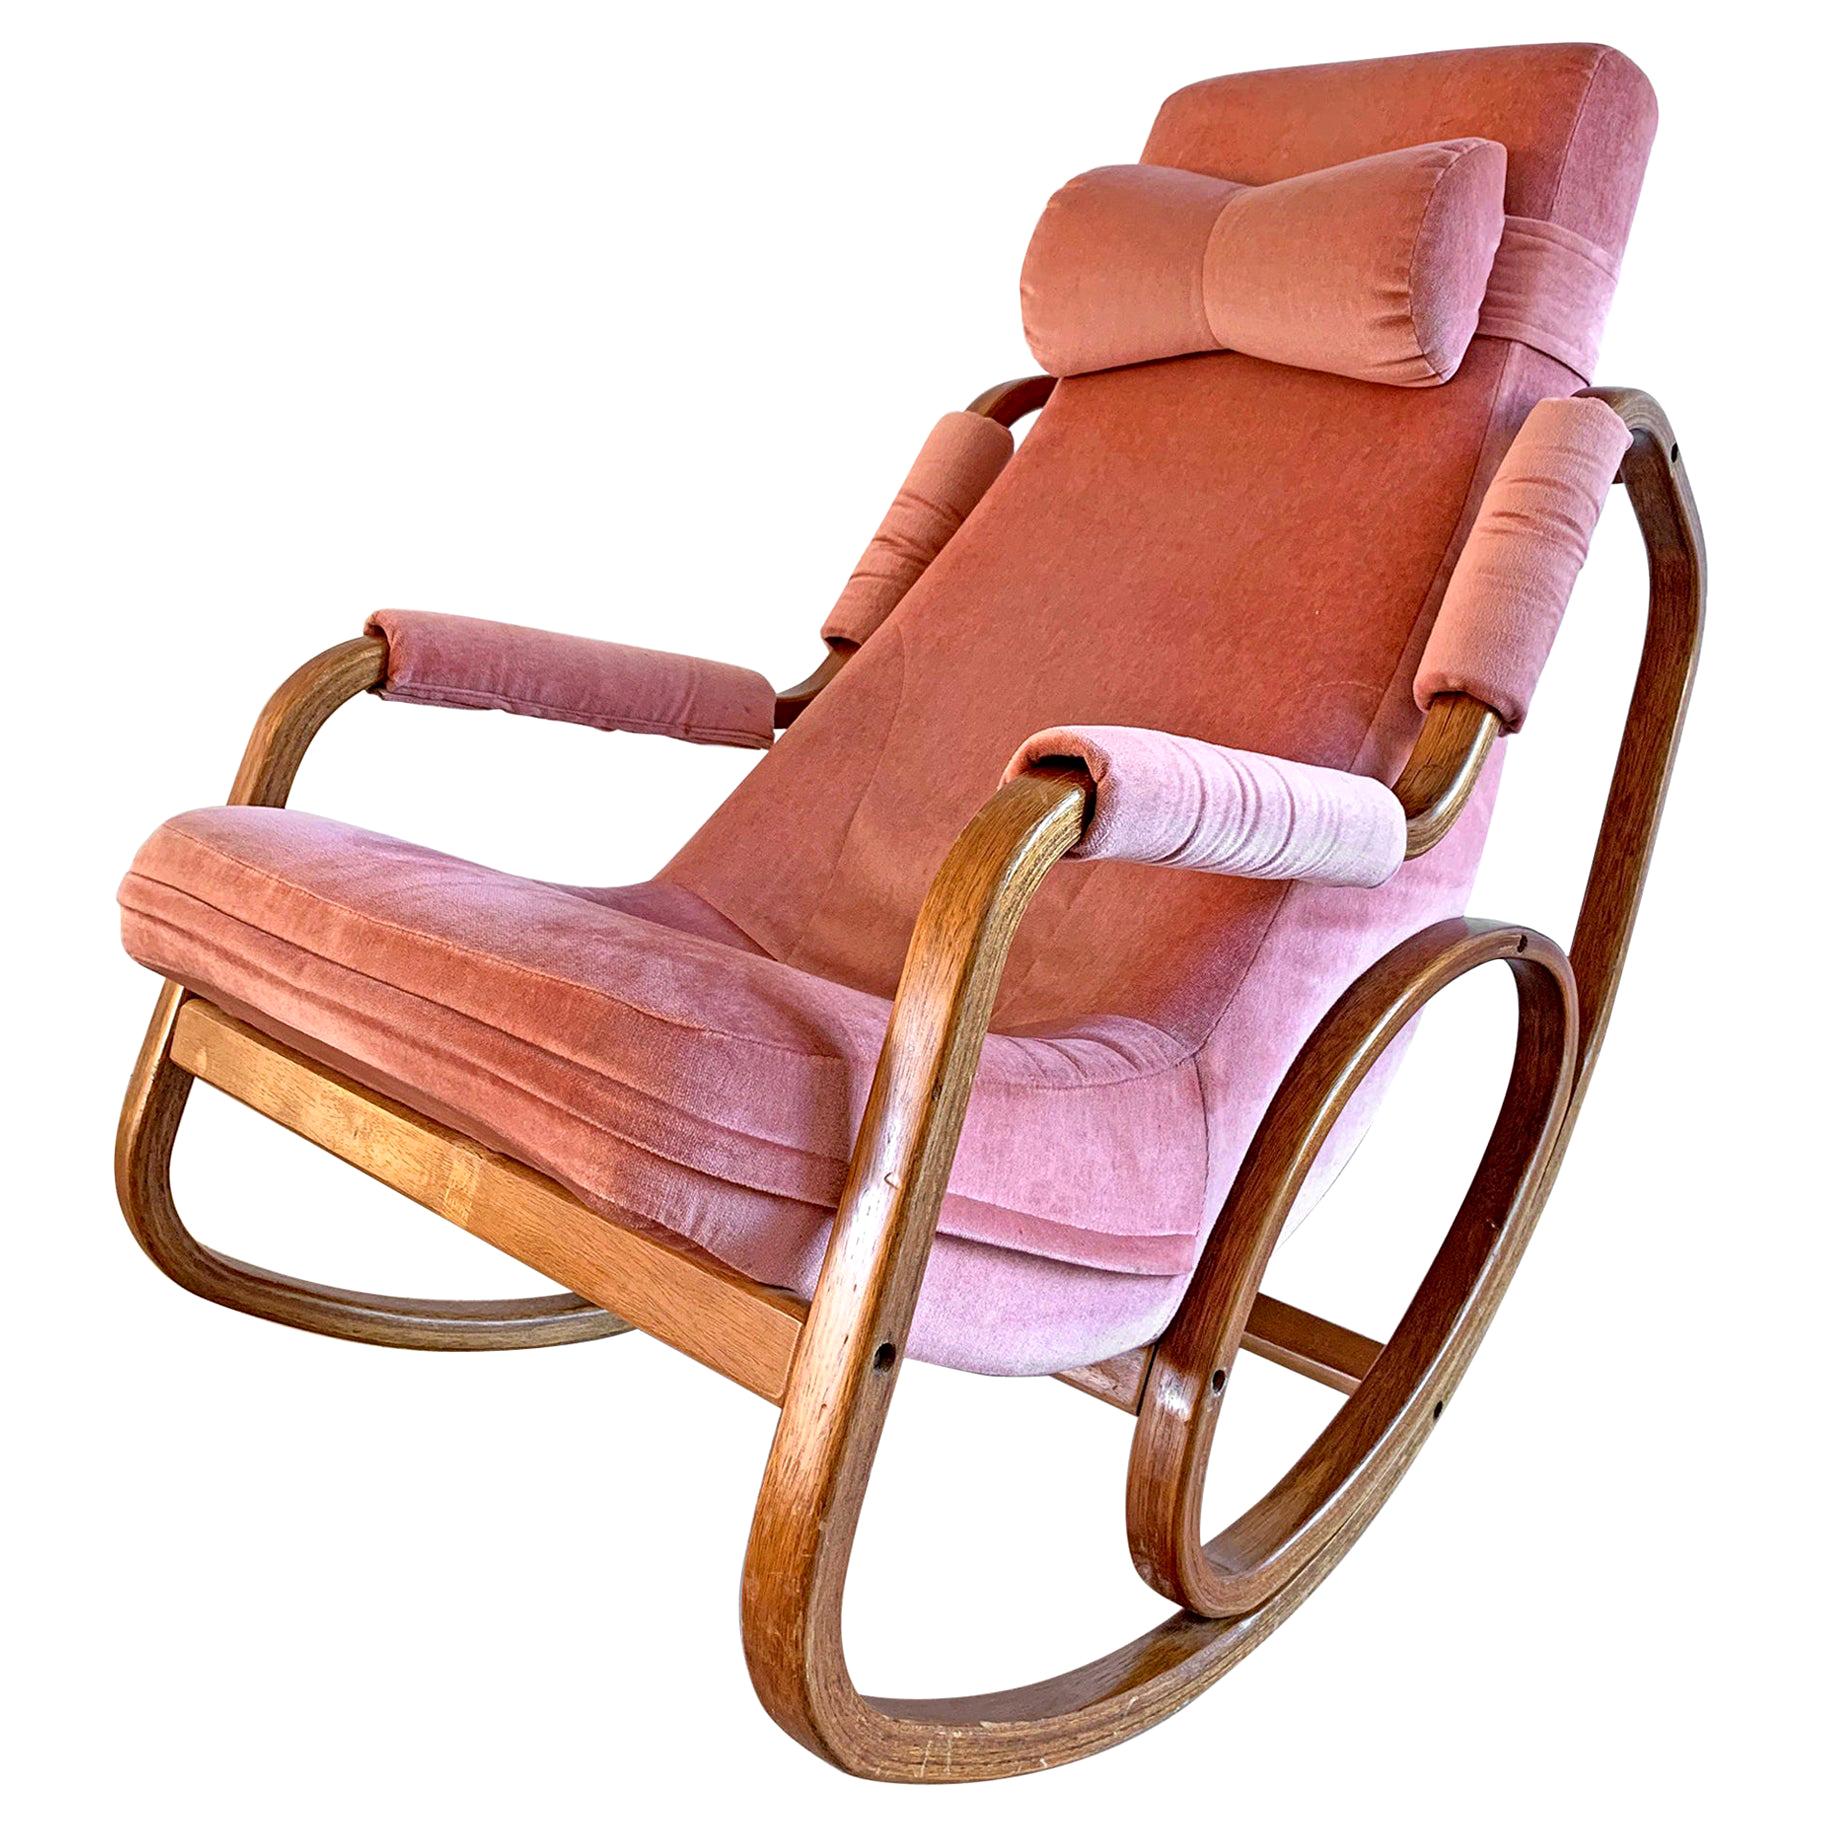 Danish Modern Midcentury Bentwood Rocking Chair in Pink Velvet